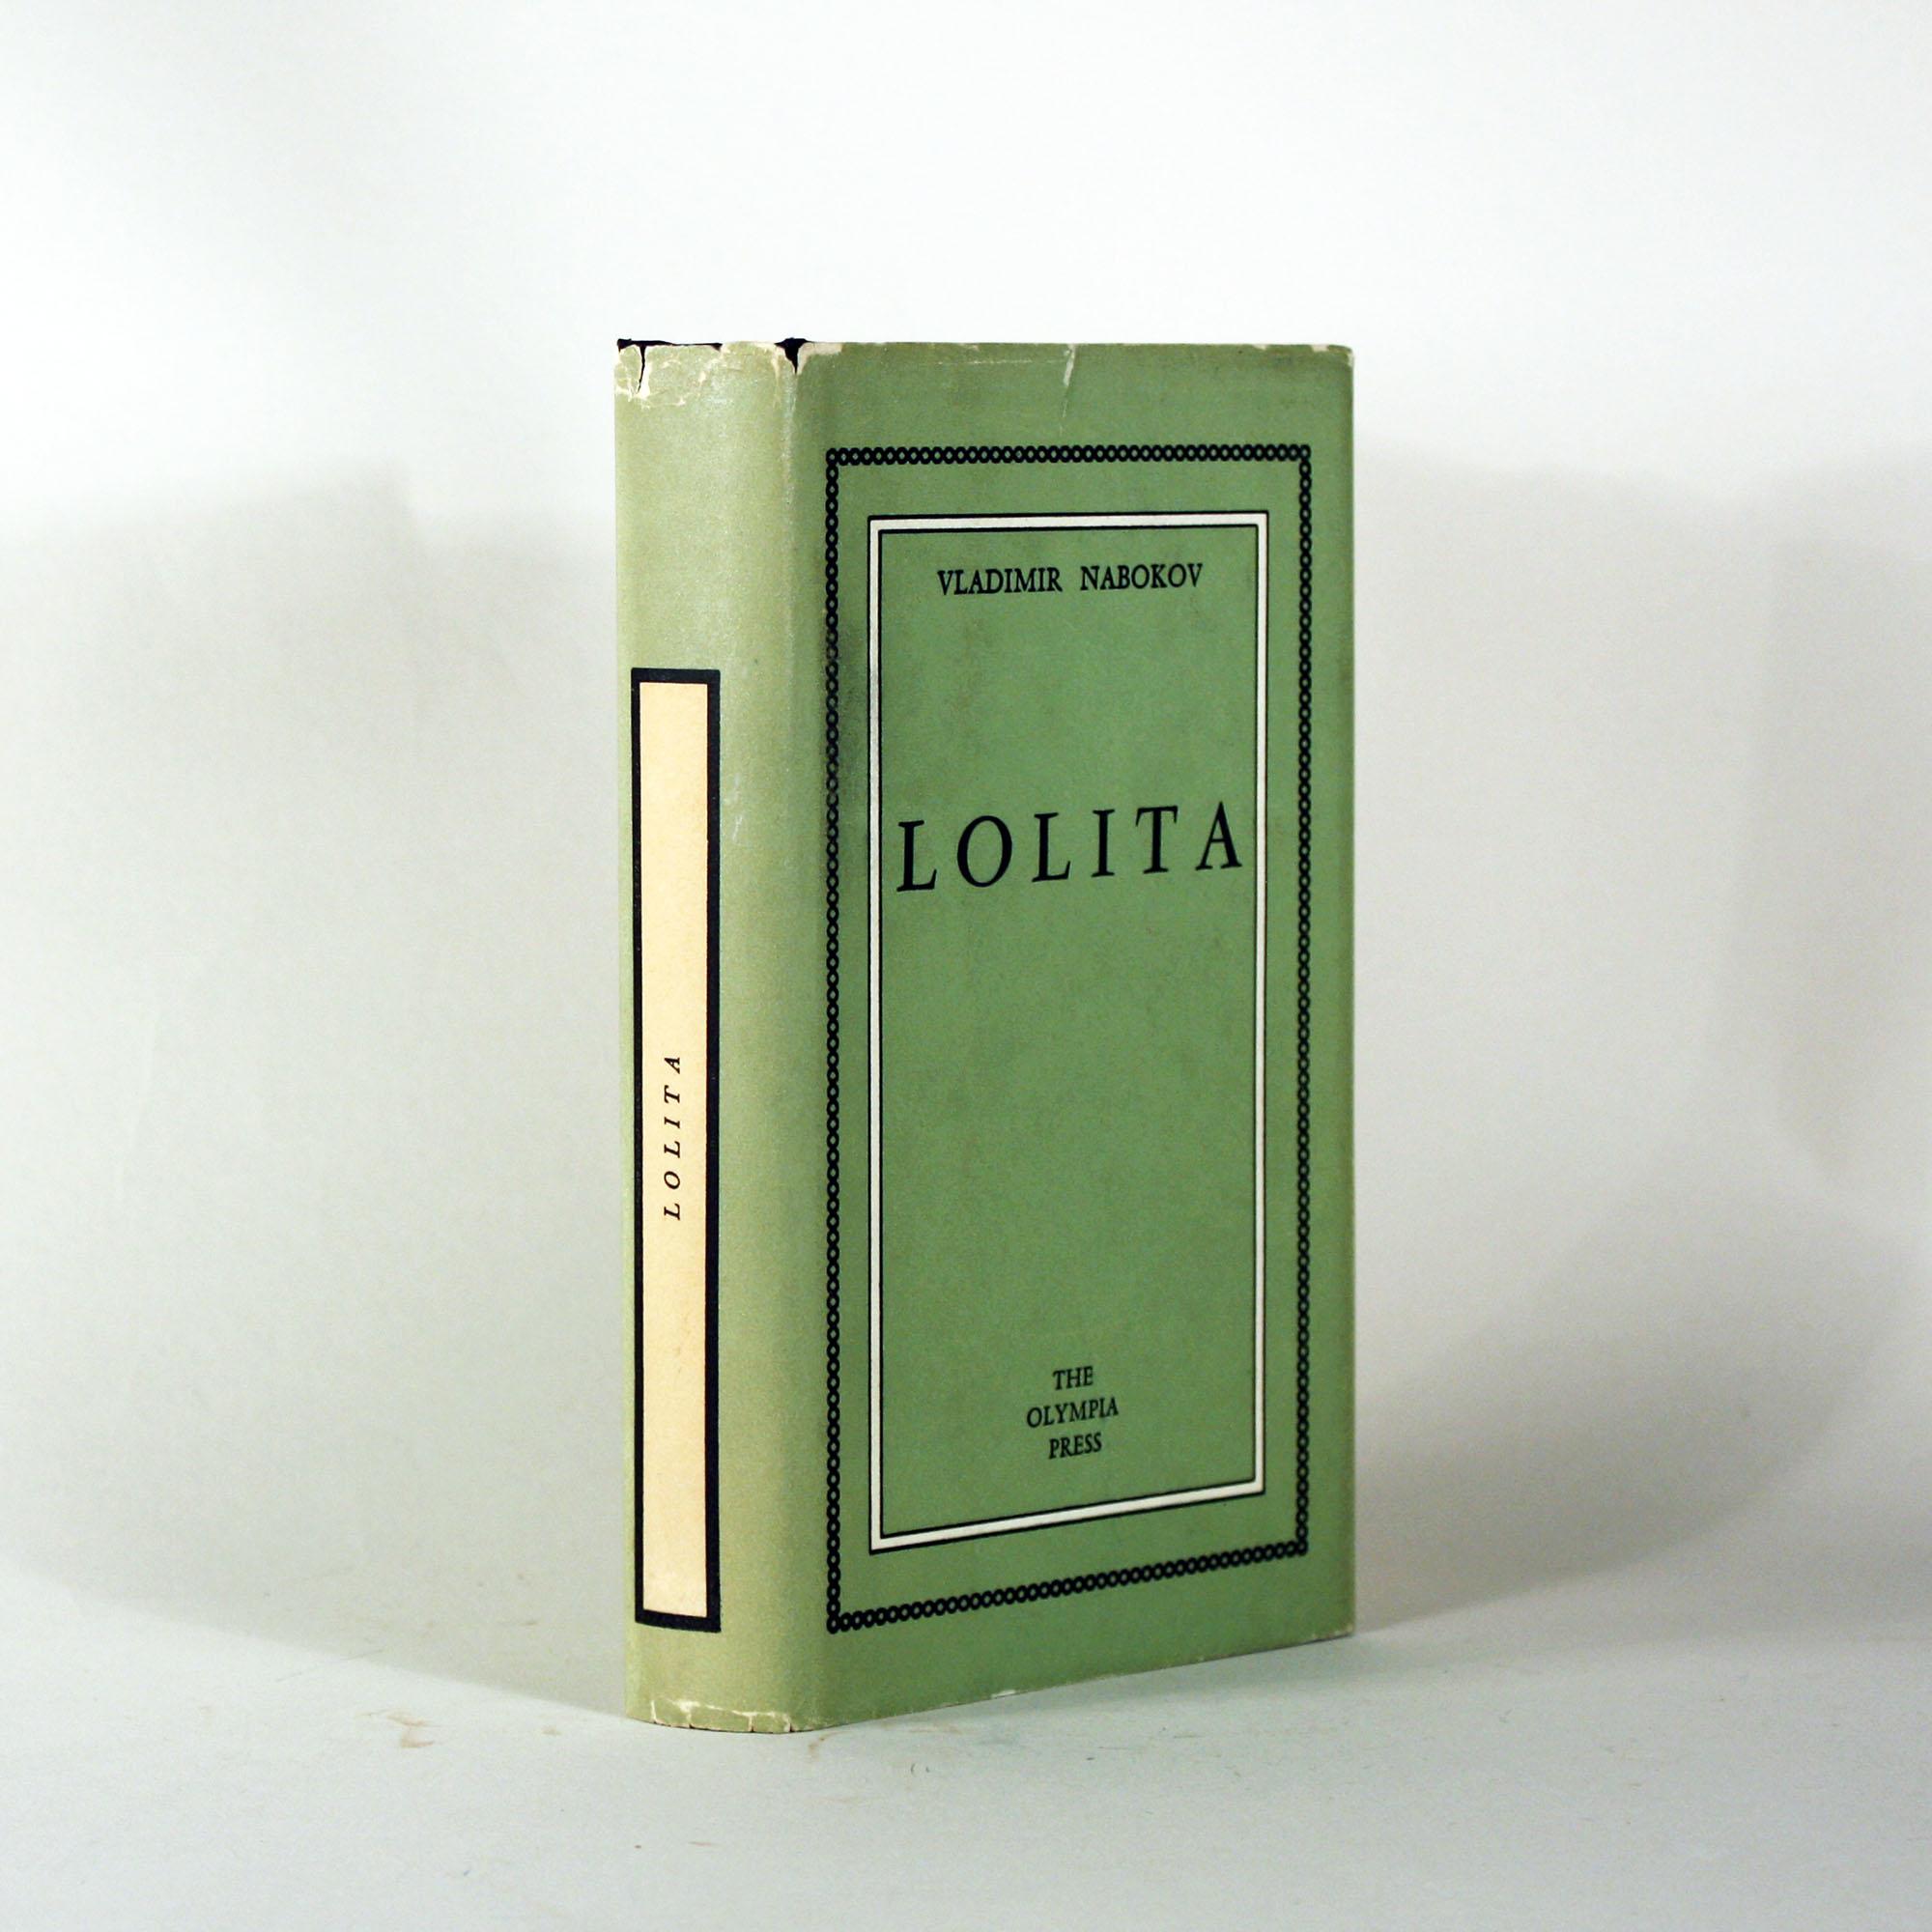 Vladimir NABOKOV. Lolita (1955). First hardcover edition